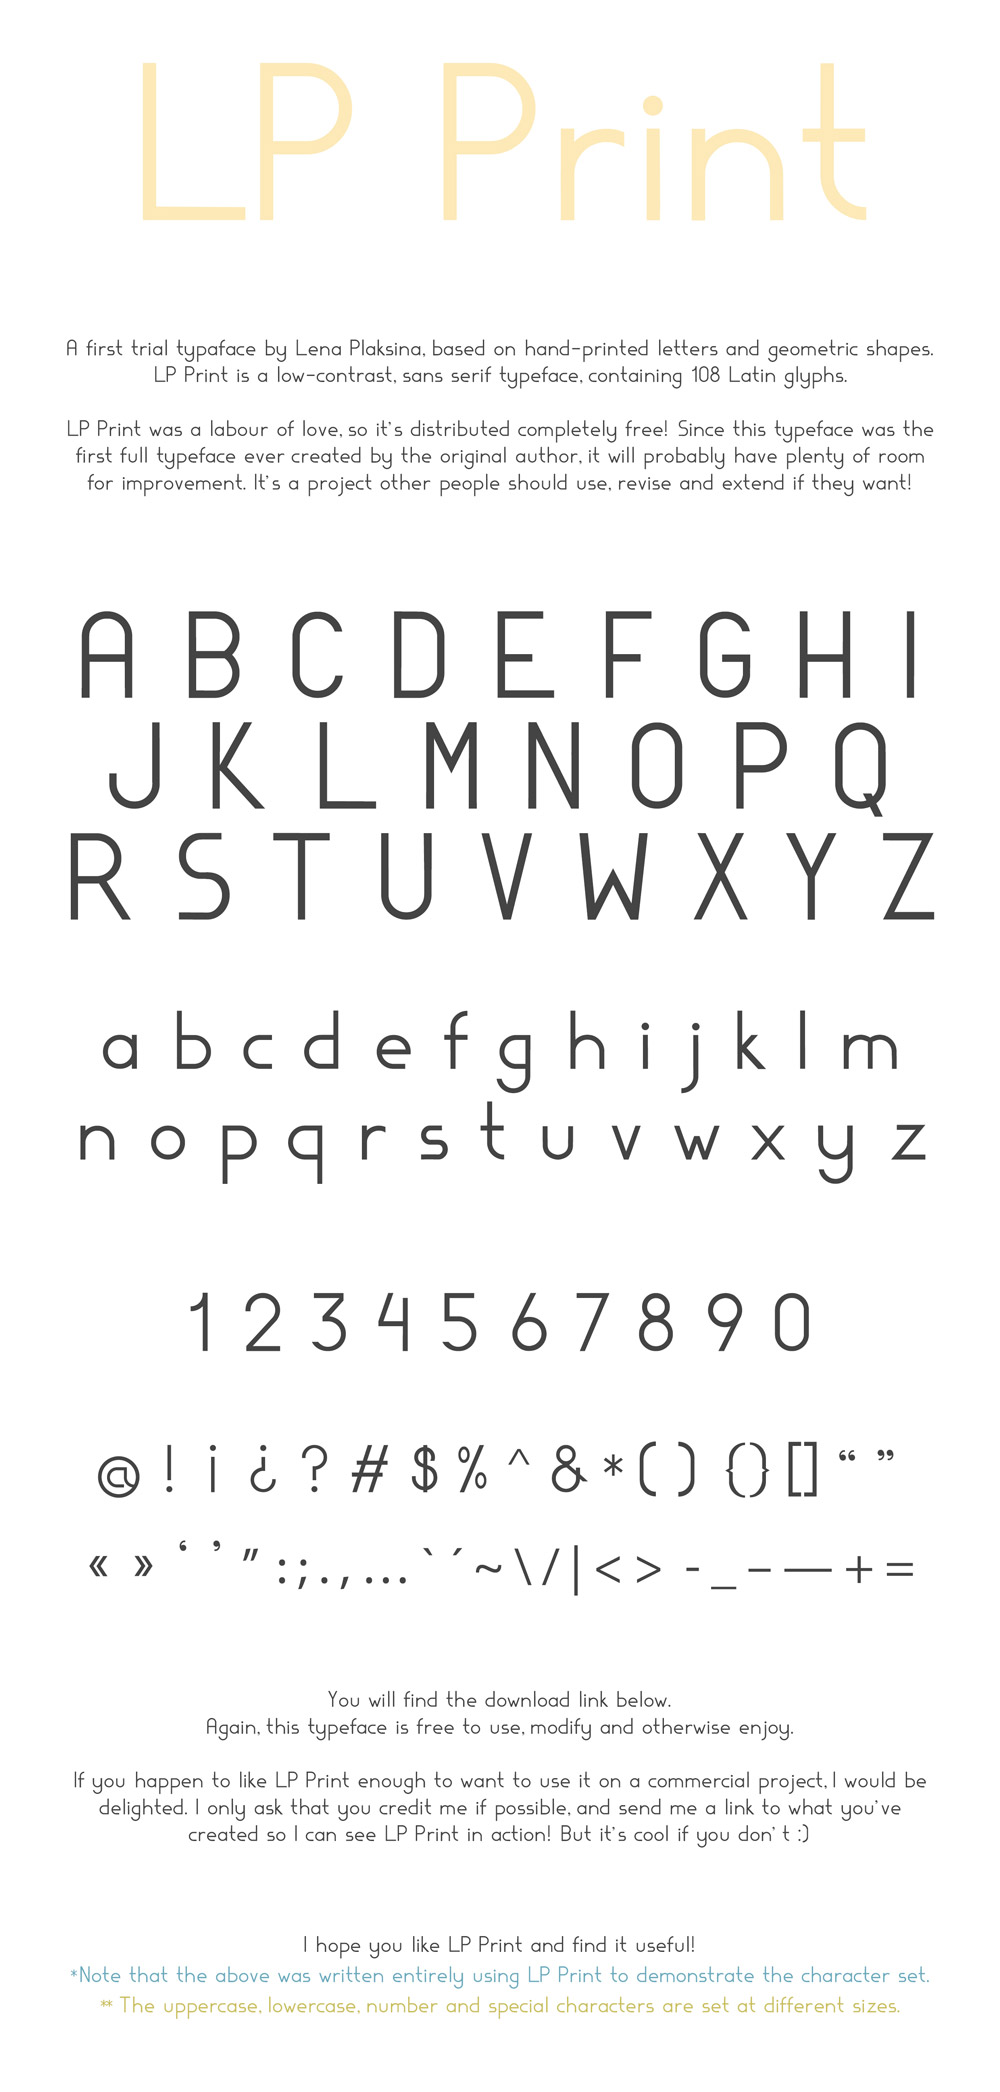 Full alphabet displayed in LP Print.